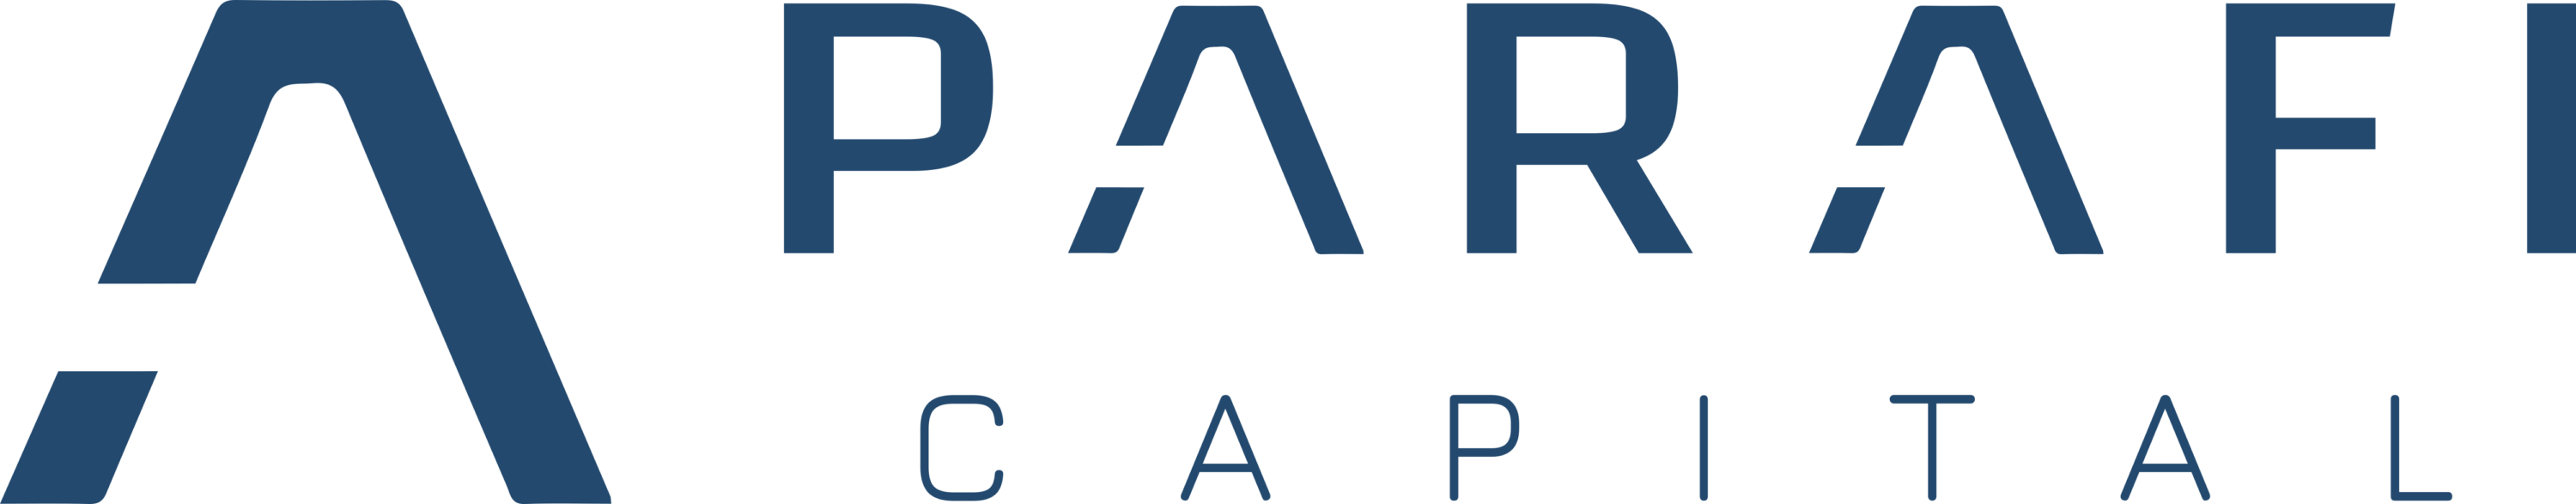 ParaFi Capital Logo